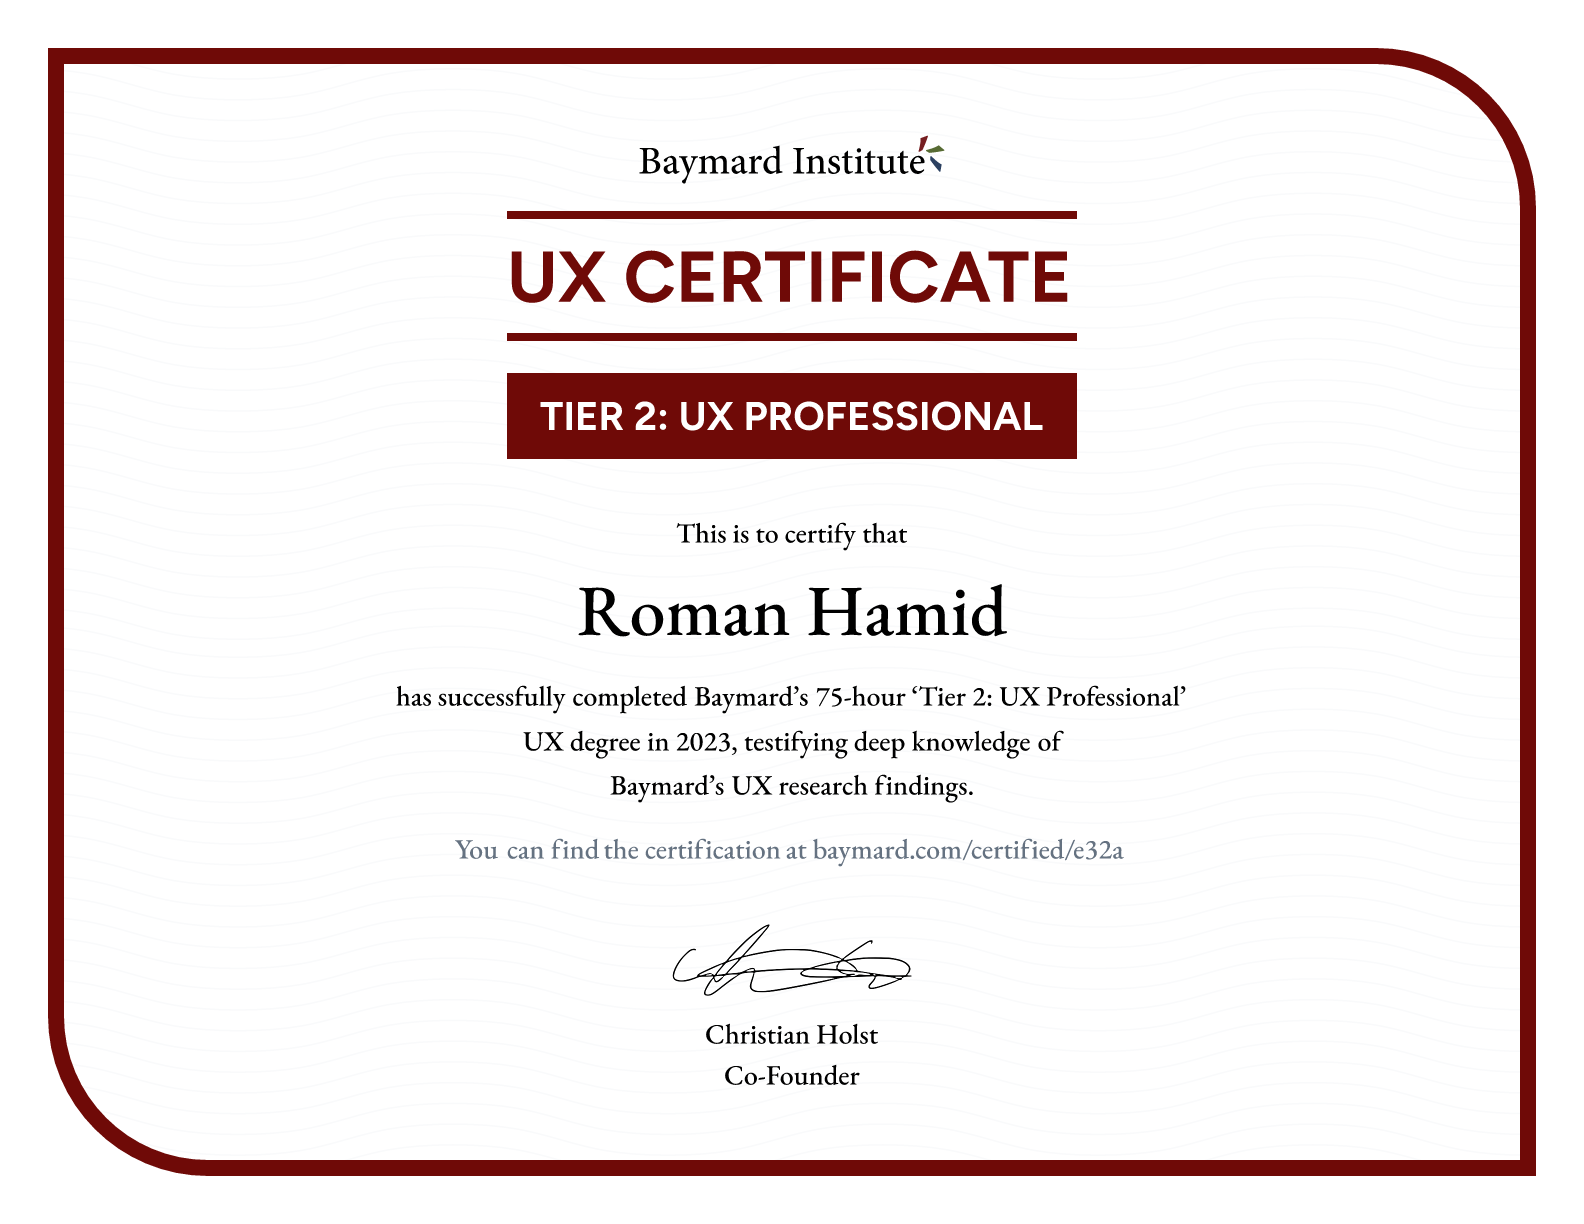 Roman Hamid’s certificate